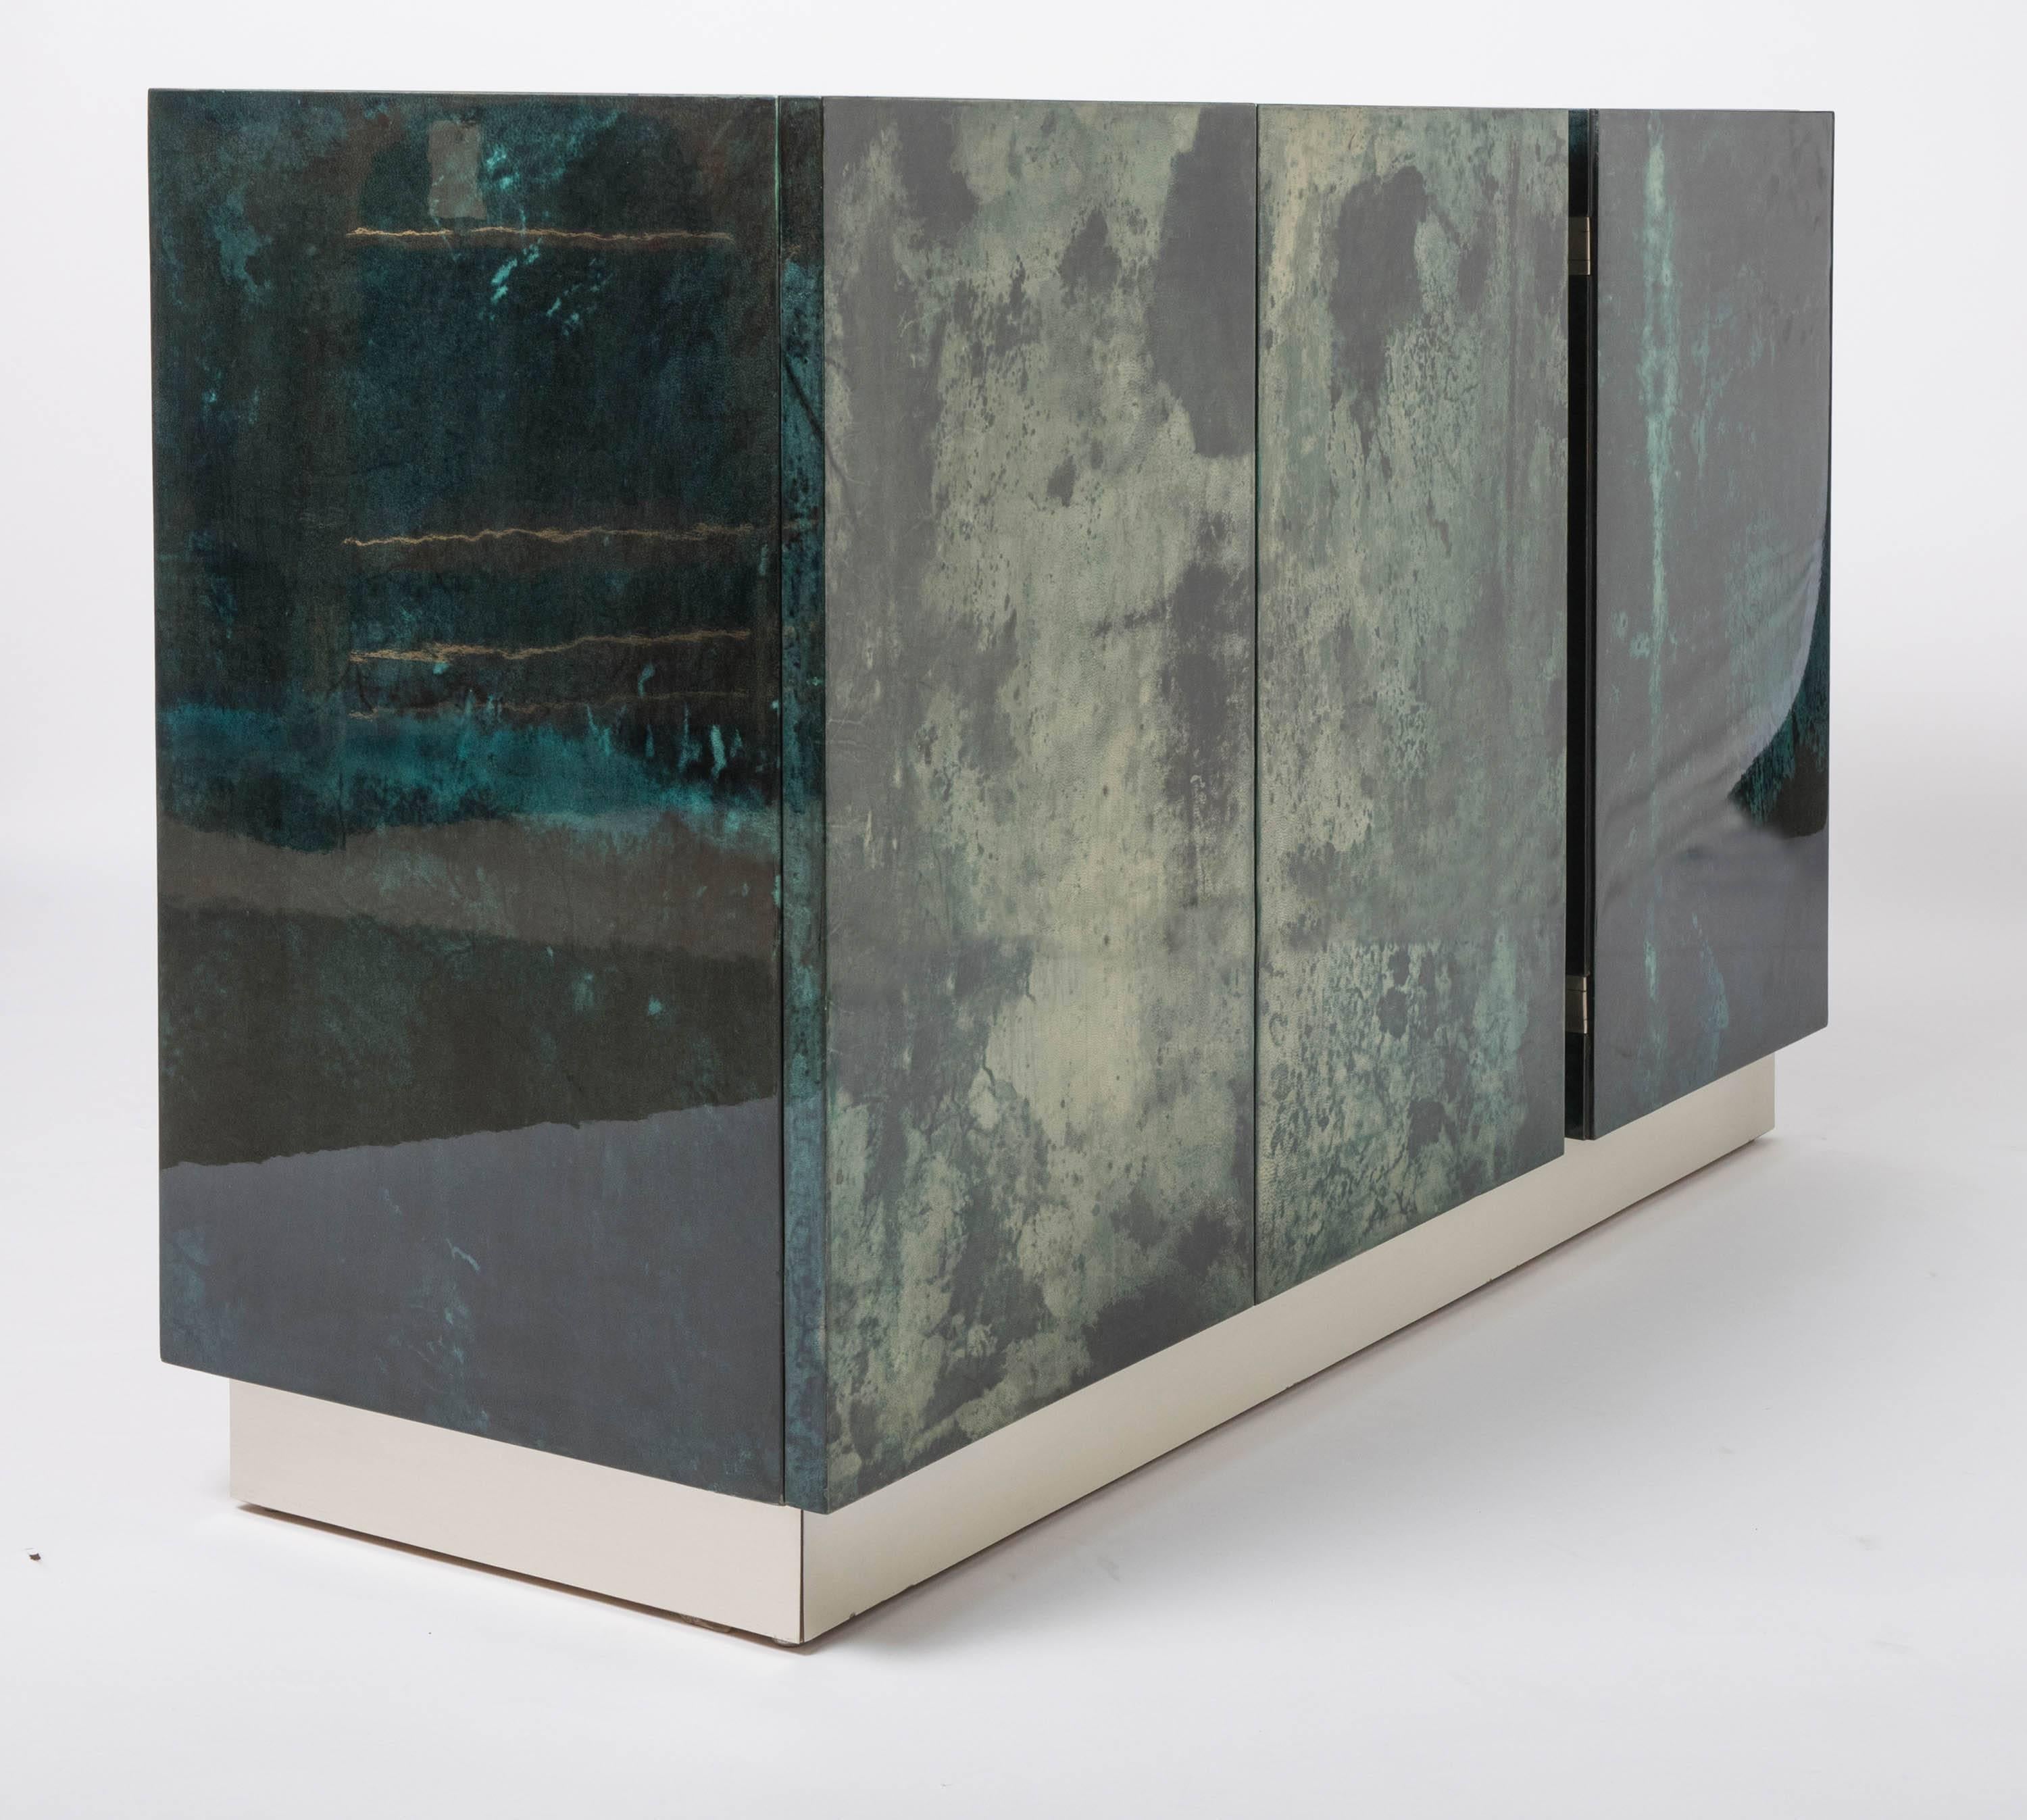 Leather Aldo Tura Cabinet of Simple Elegant Form